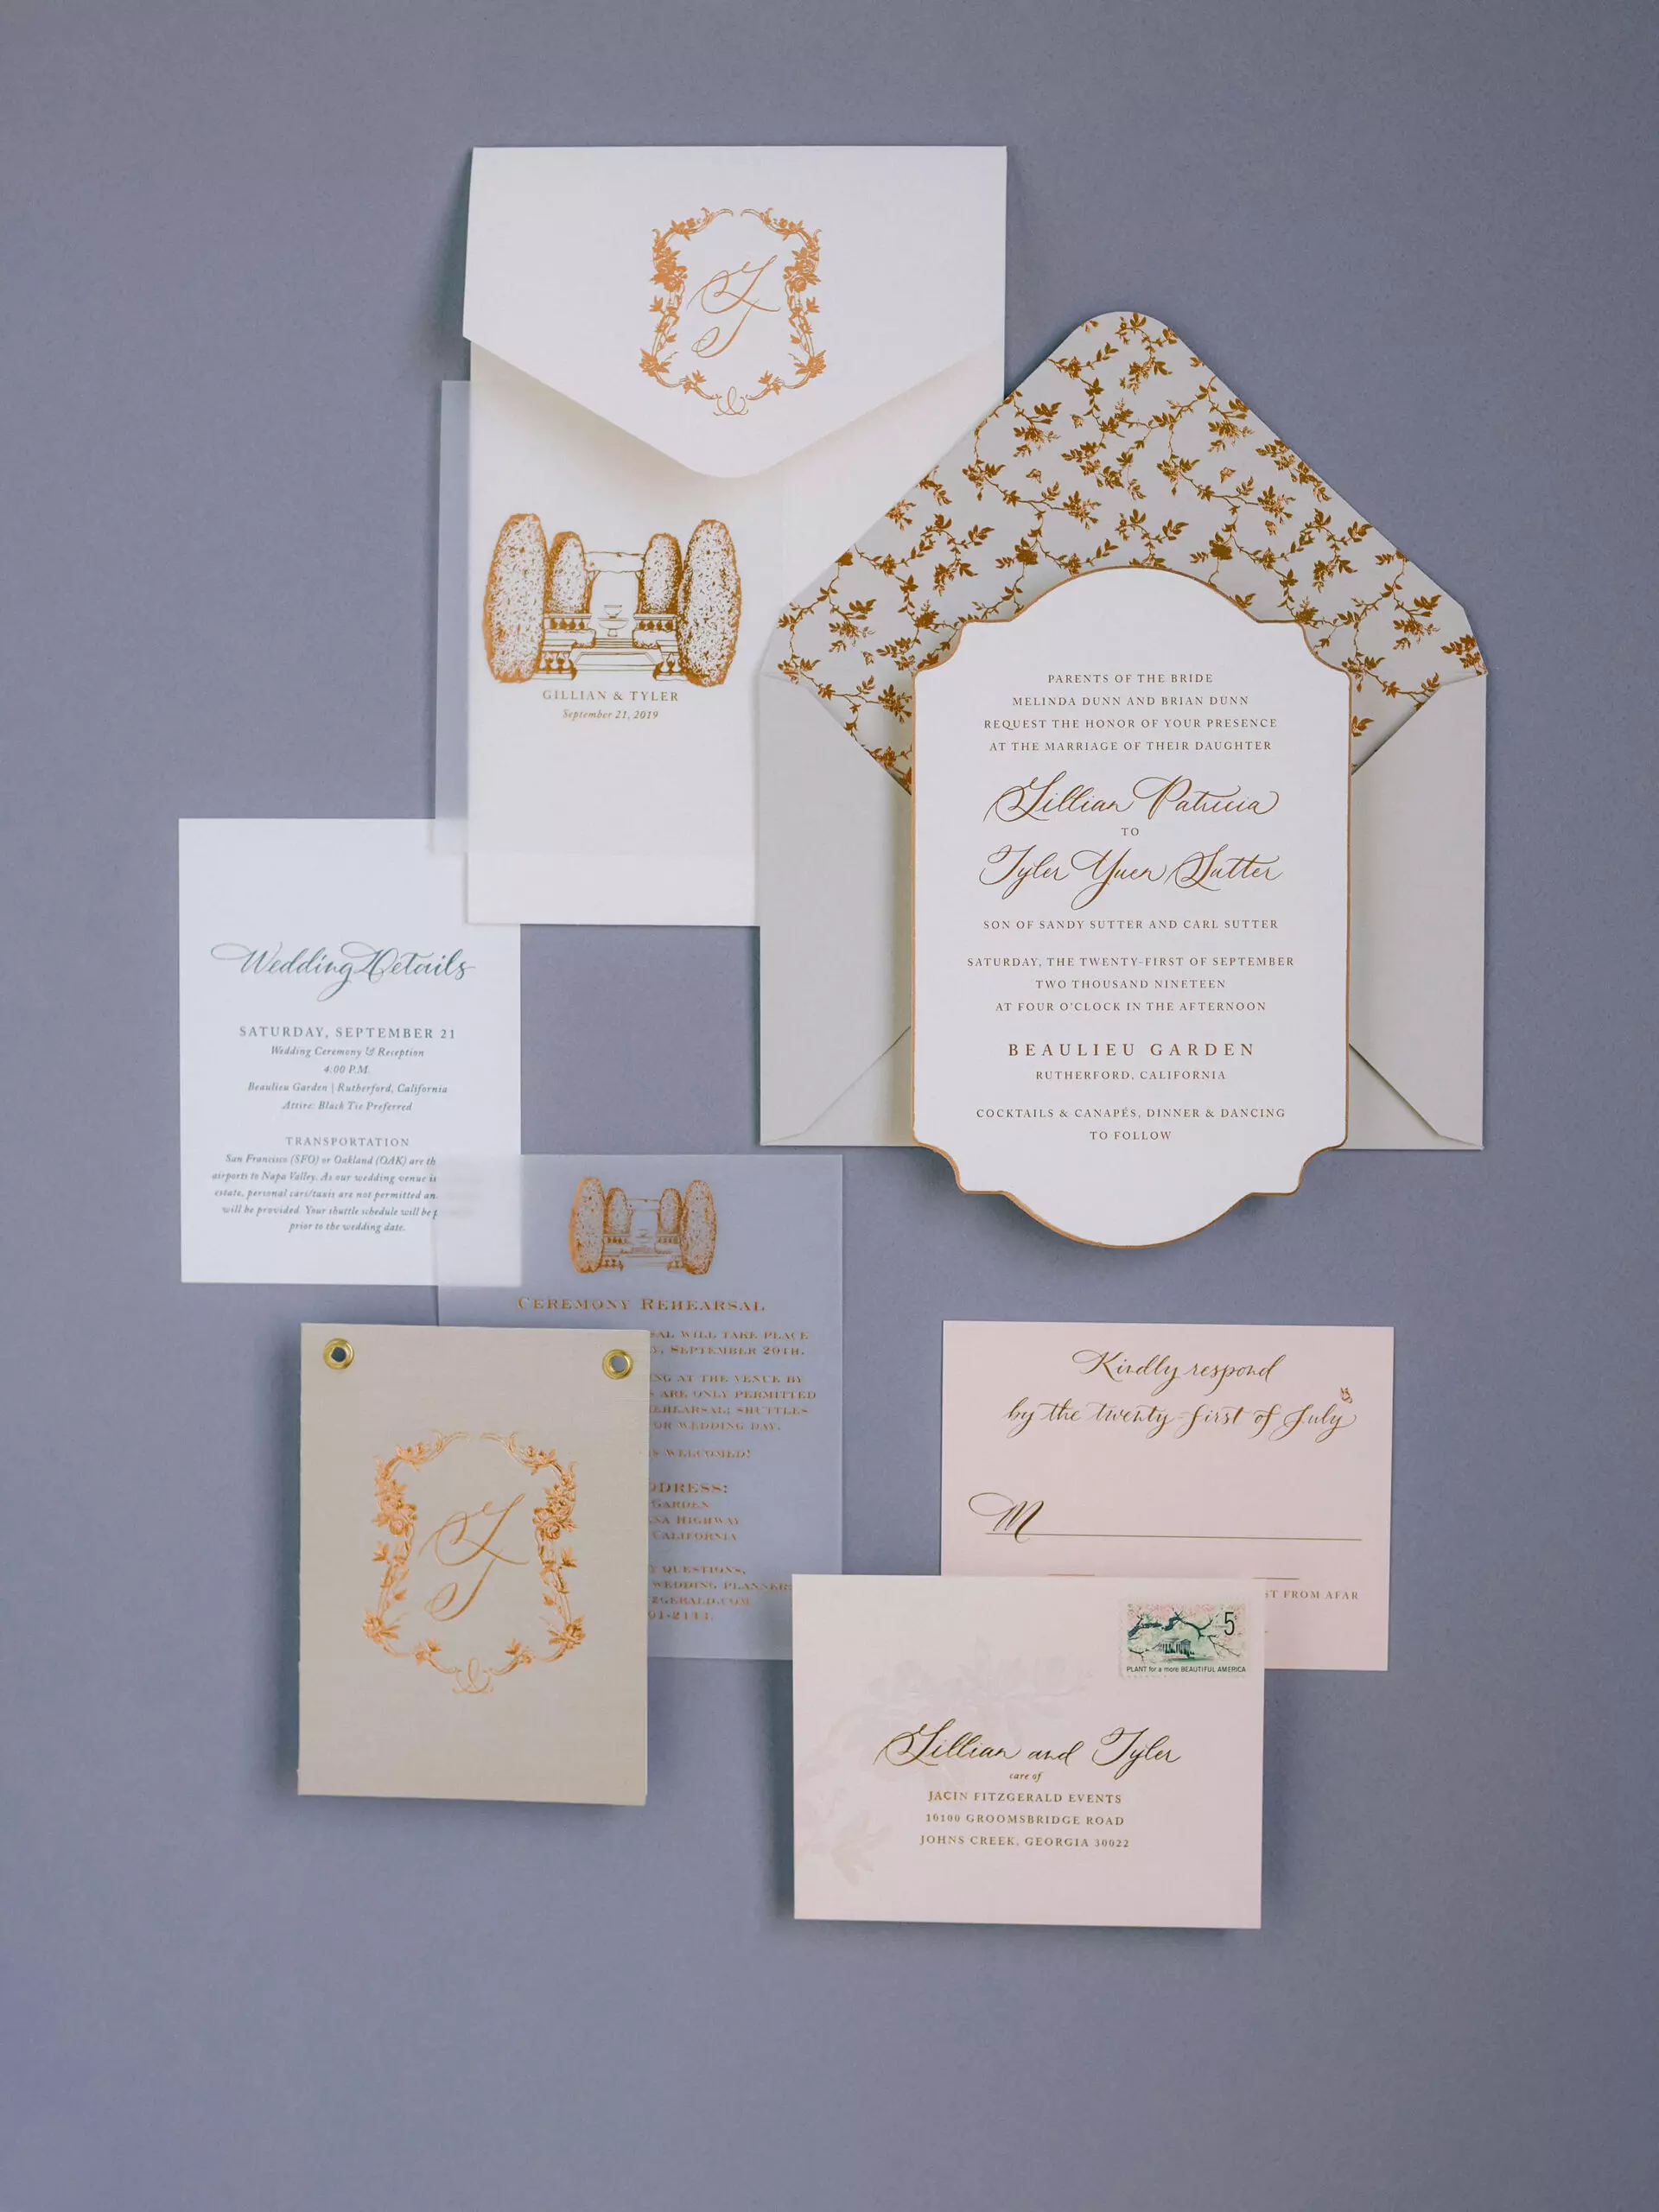 The Stylish Bride wedding client invitations